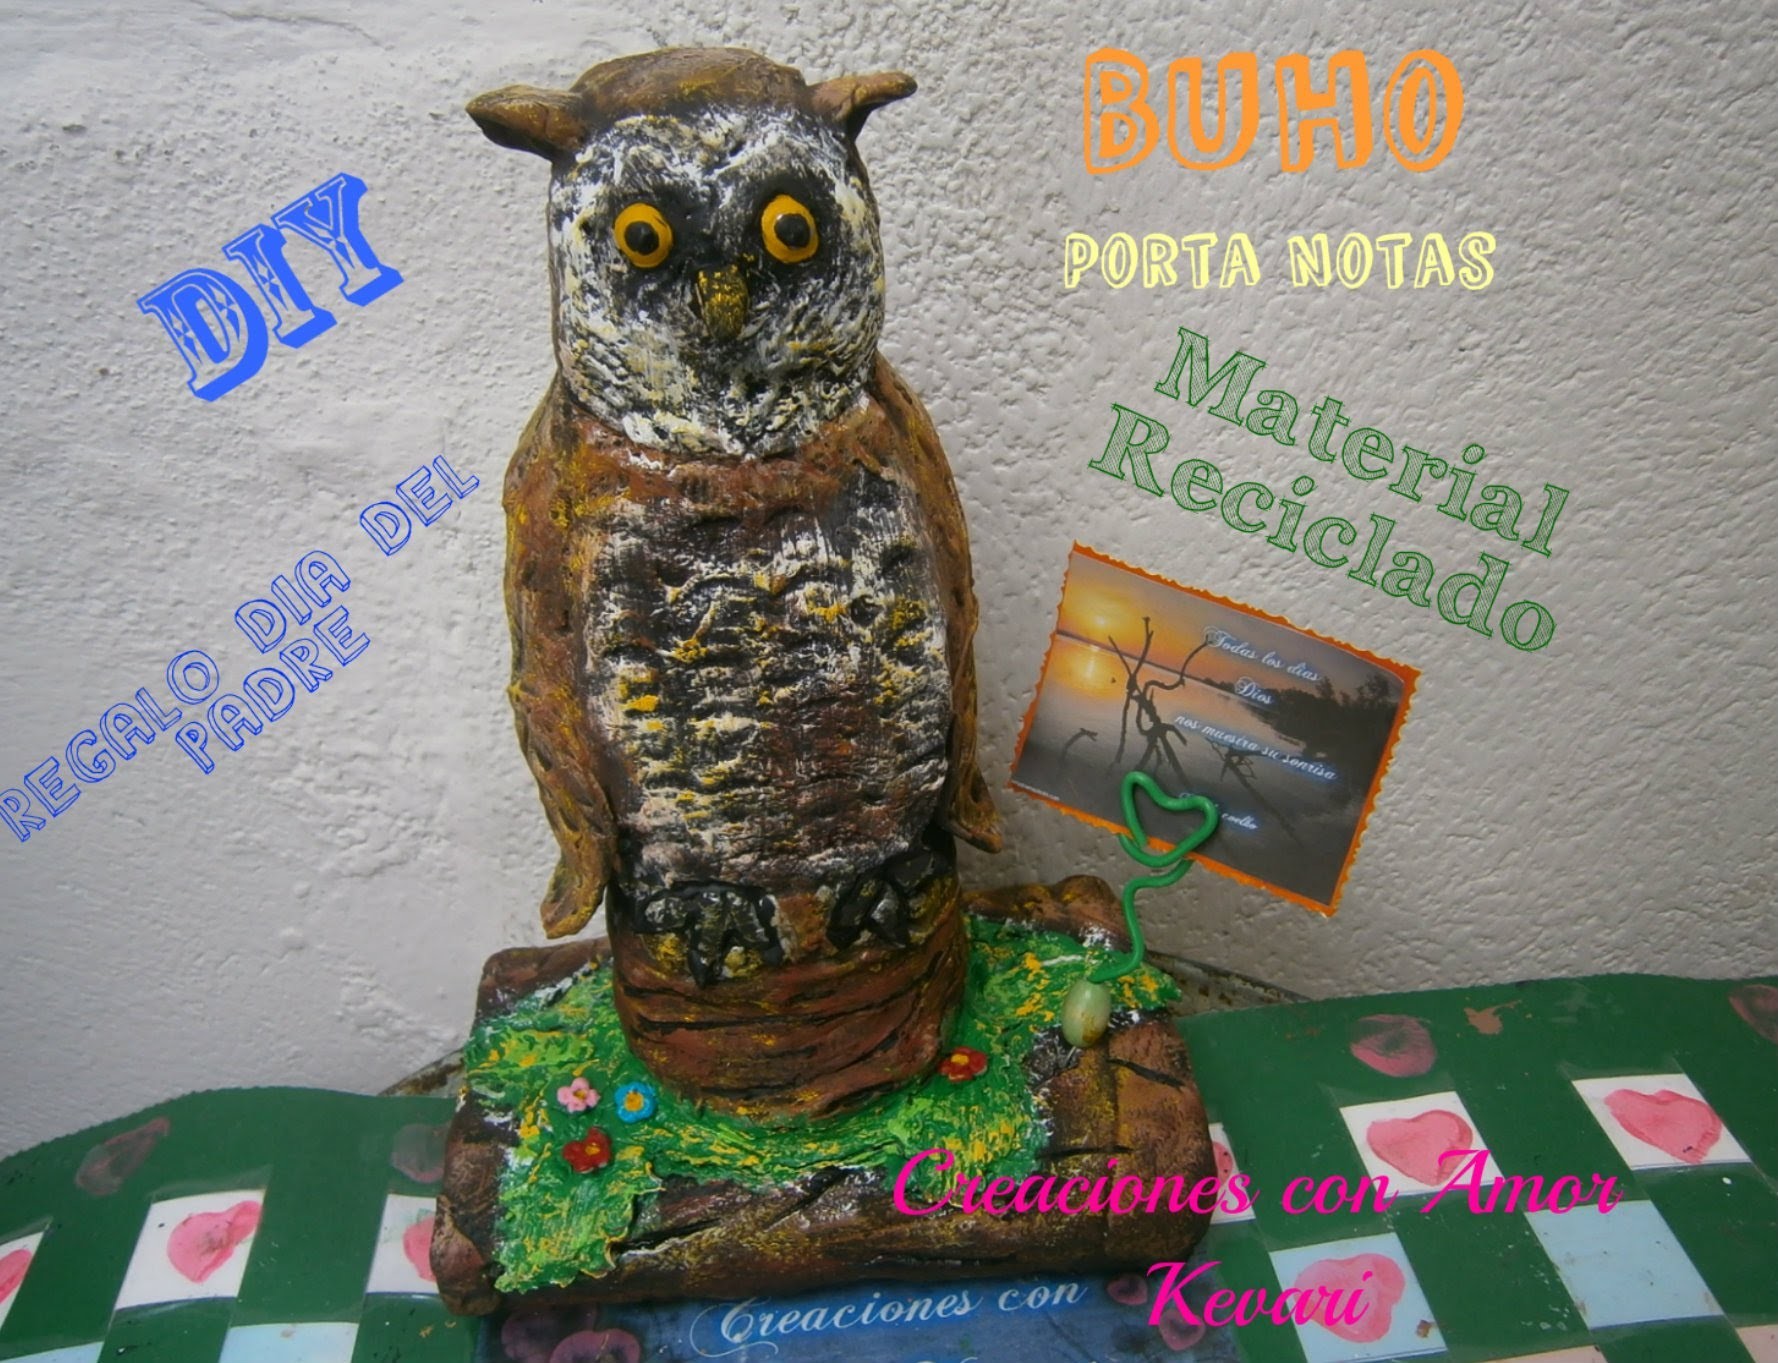 Buho Porta Notas Material Reciclado Manualidad Regalo dia del Padre.Owl with Recycled Materials